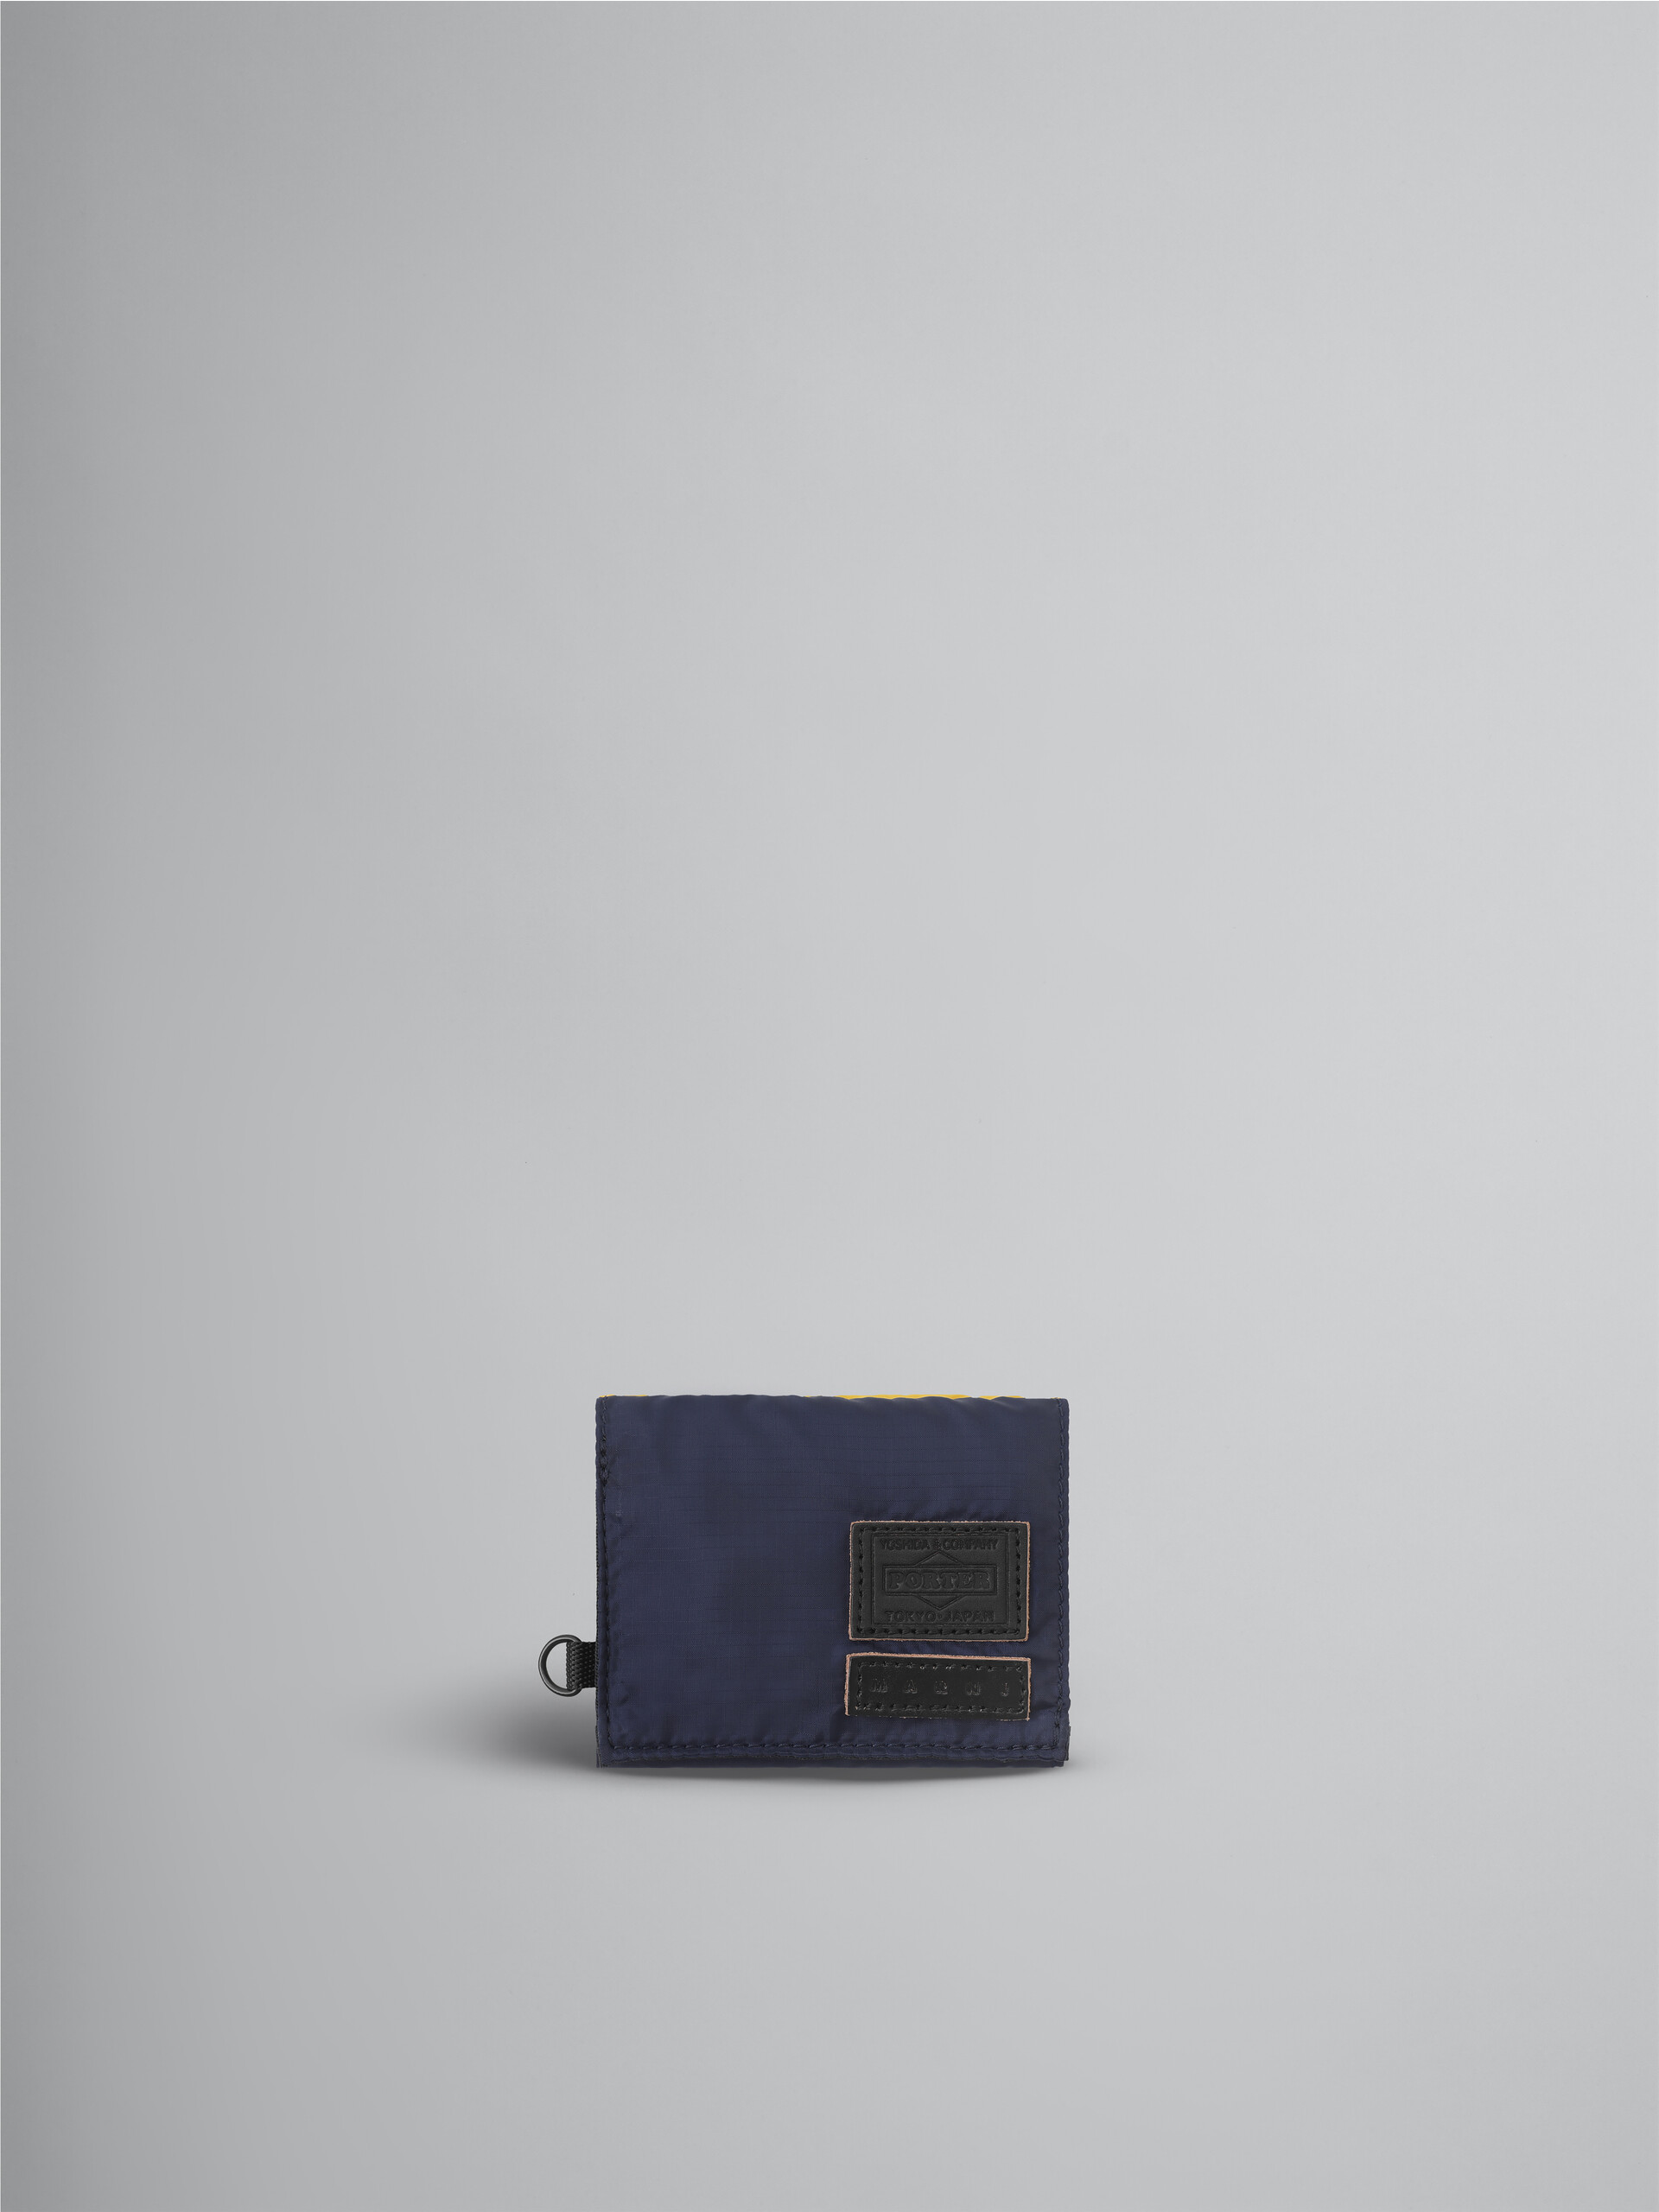 MARNI X PORTER - CARD CASE 16CB 
OLIVE GREEN - 財布 - Image 1